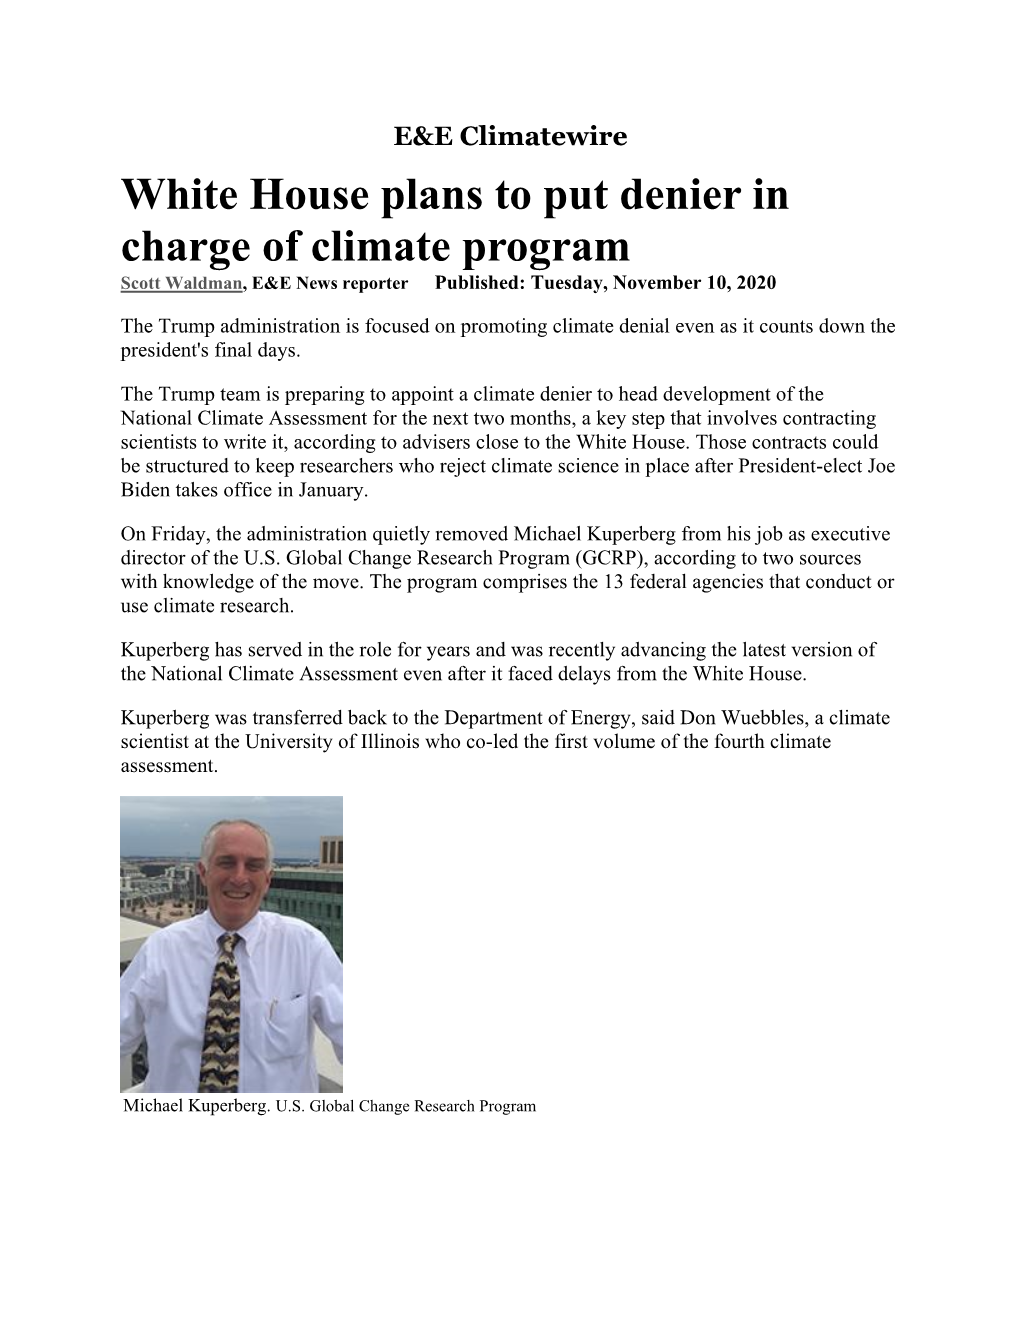 White House Plans to Put Denier in Charge of Climate Program Scott Waldman, E&E News Reporter Published: Tuesday, November 10, 2020